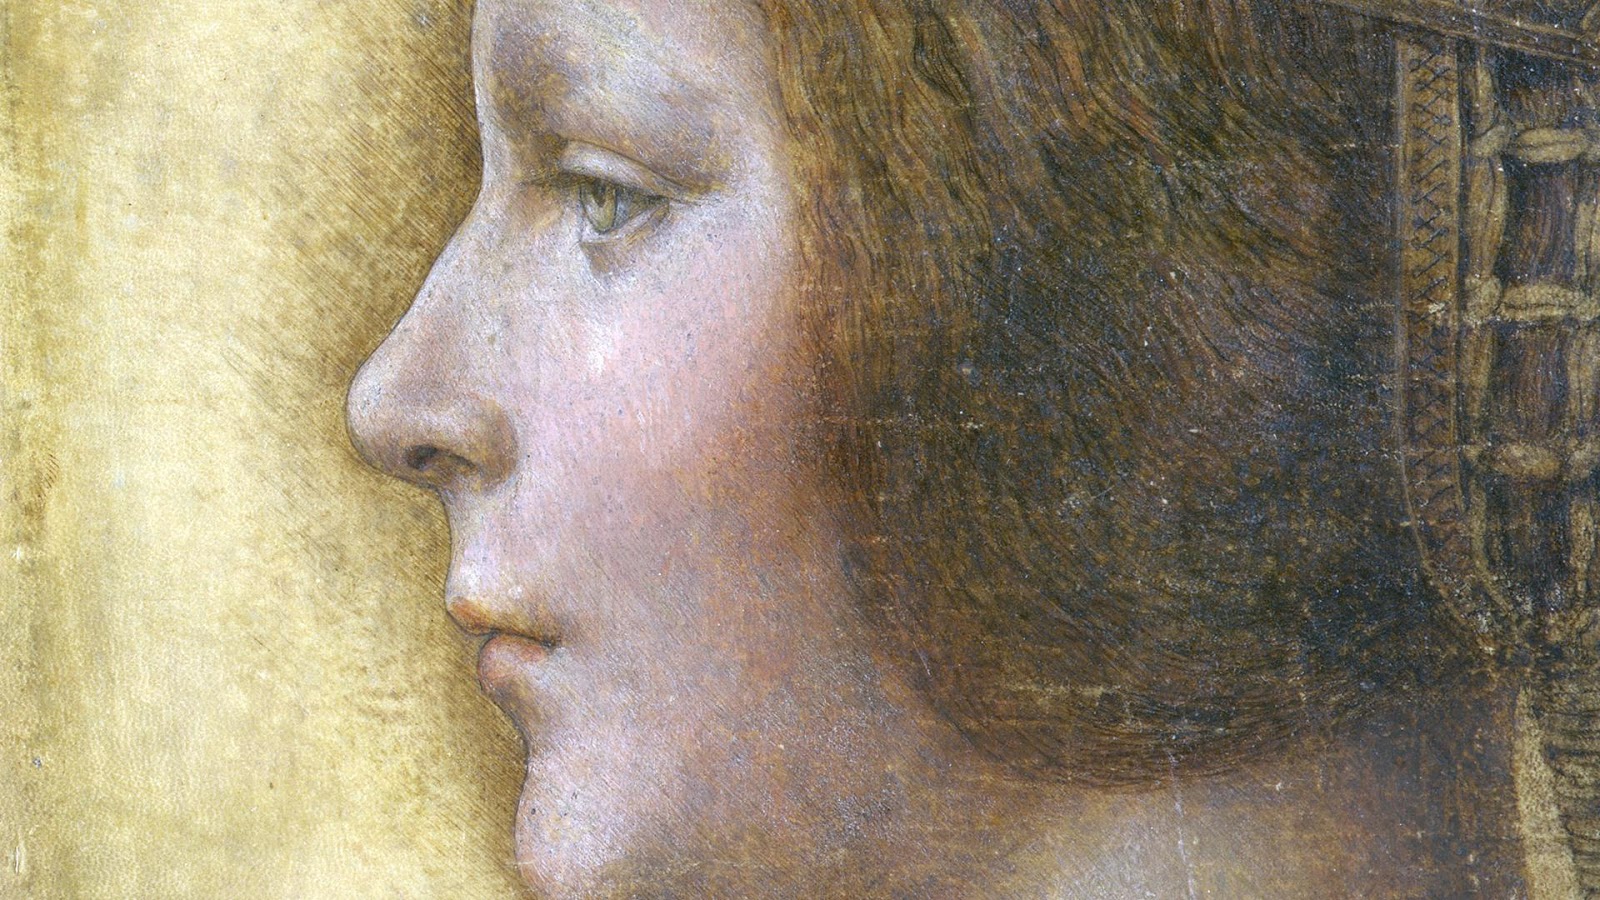 Leonardo+da+Vinci-1452-1519 (927).jpg